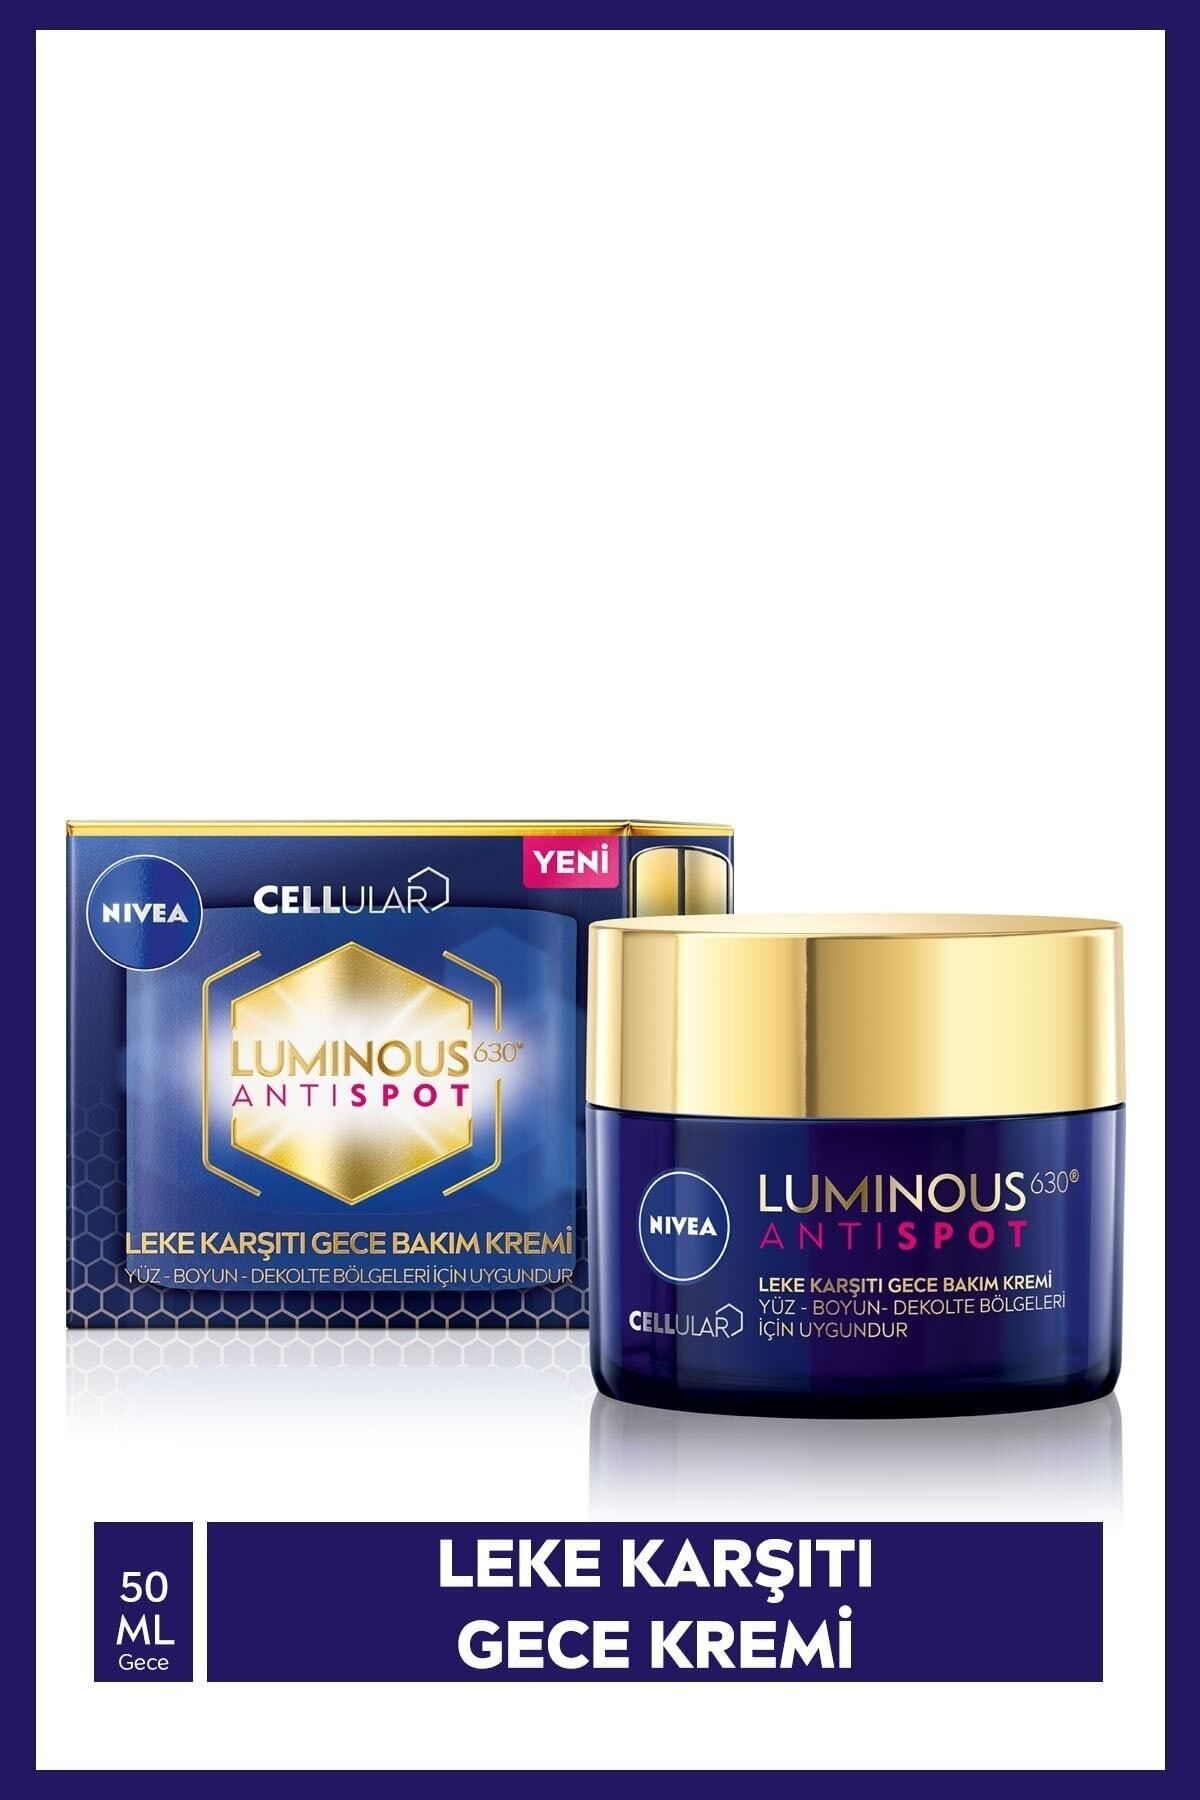 NIVEA Ruya Luminous630 Anti-Blemish Night Care Cream 50 ml Hyaluronic Acid